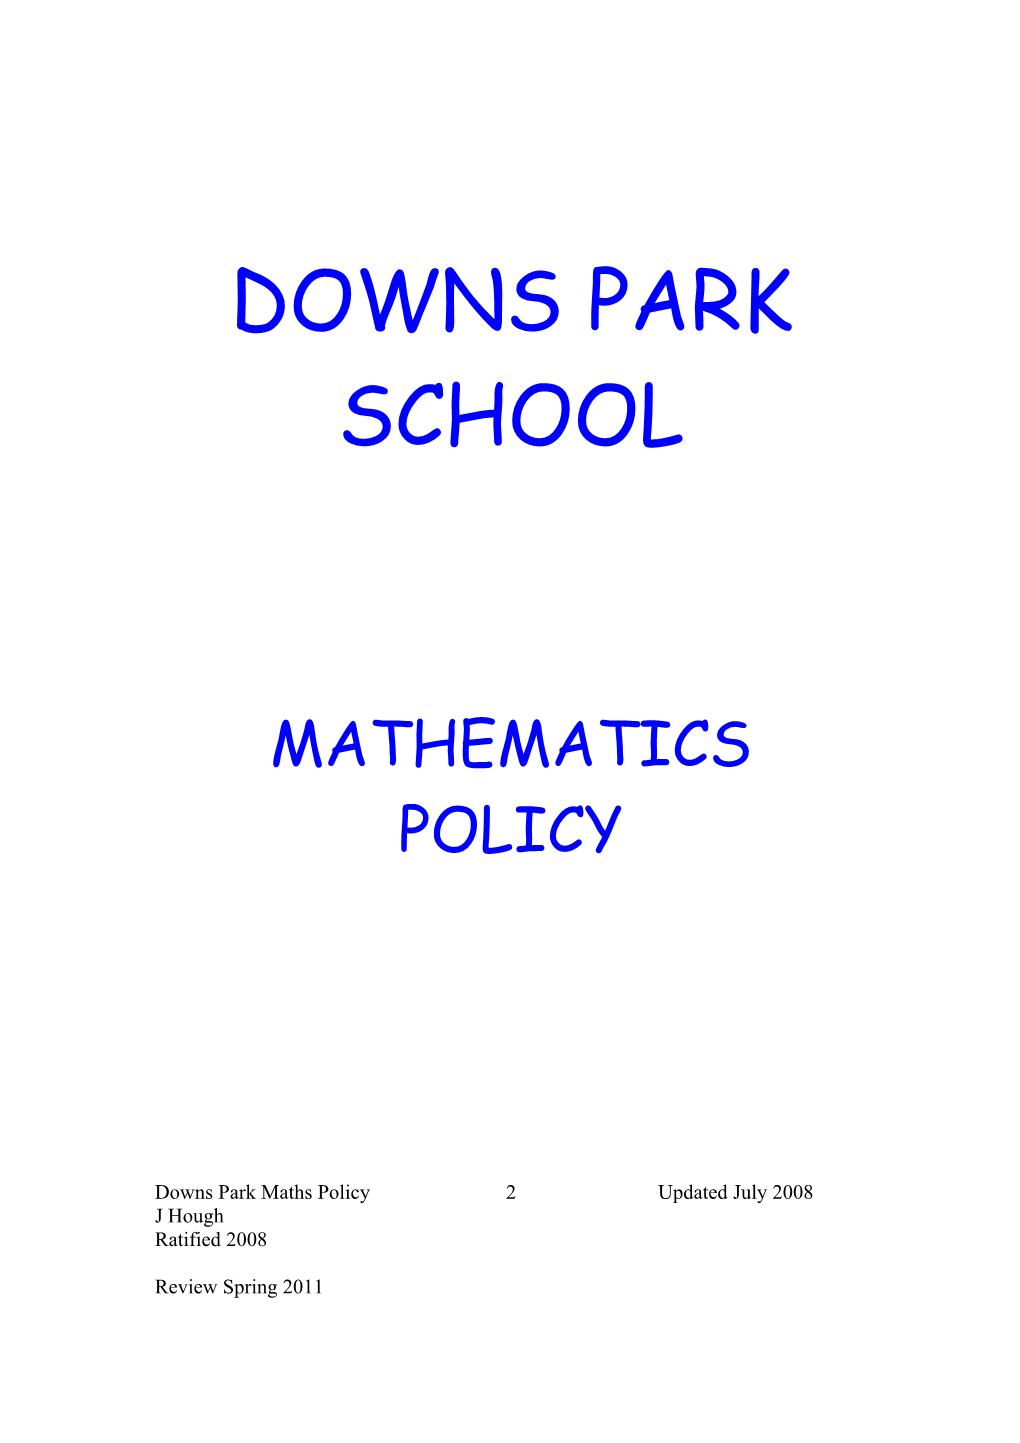 Downs Park School